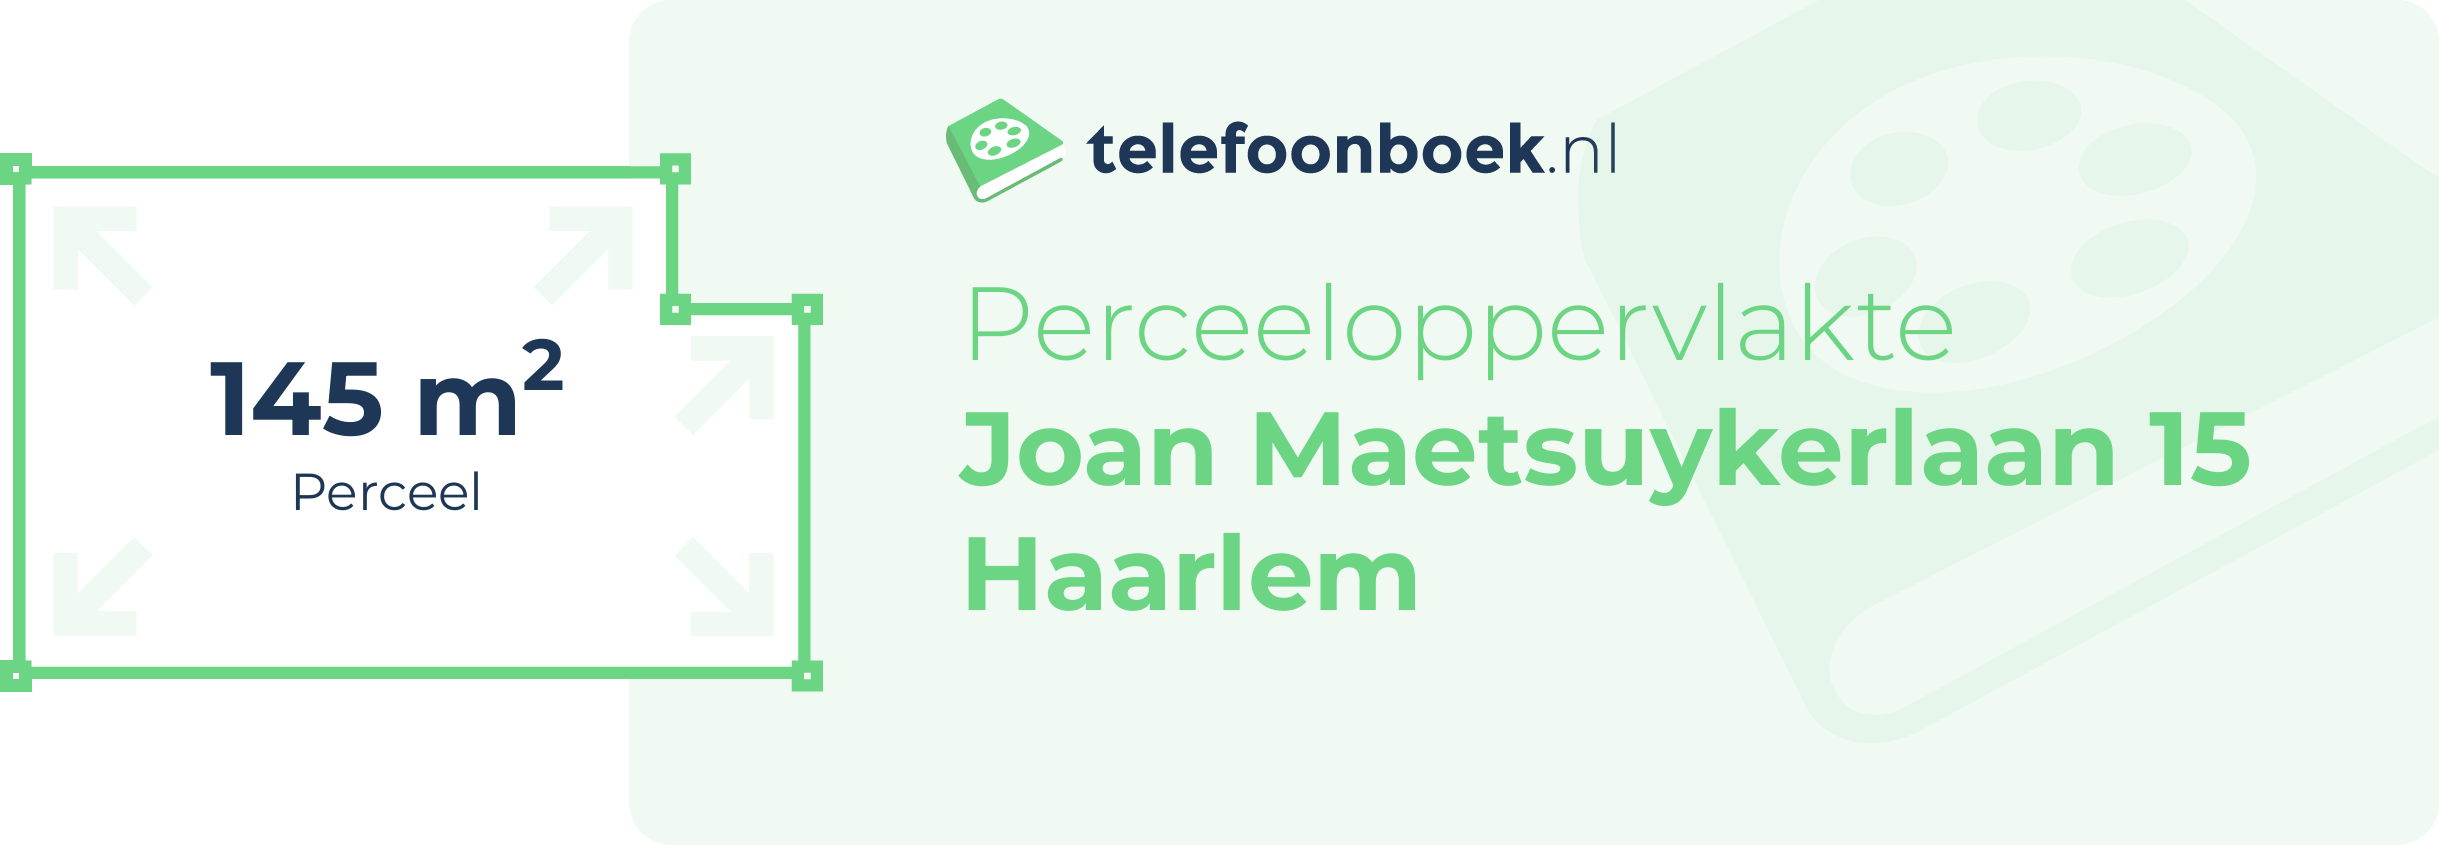 Perceeloppervlakte Joan Maetsuykerlaan 15 Haarlem